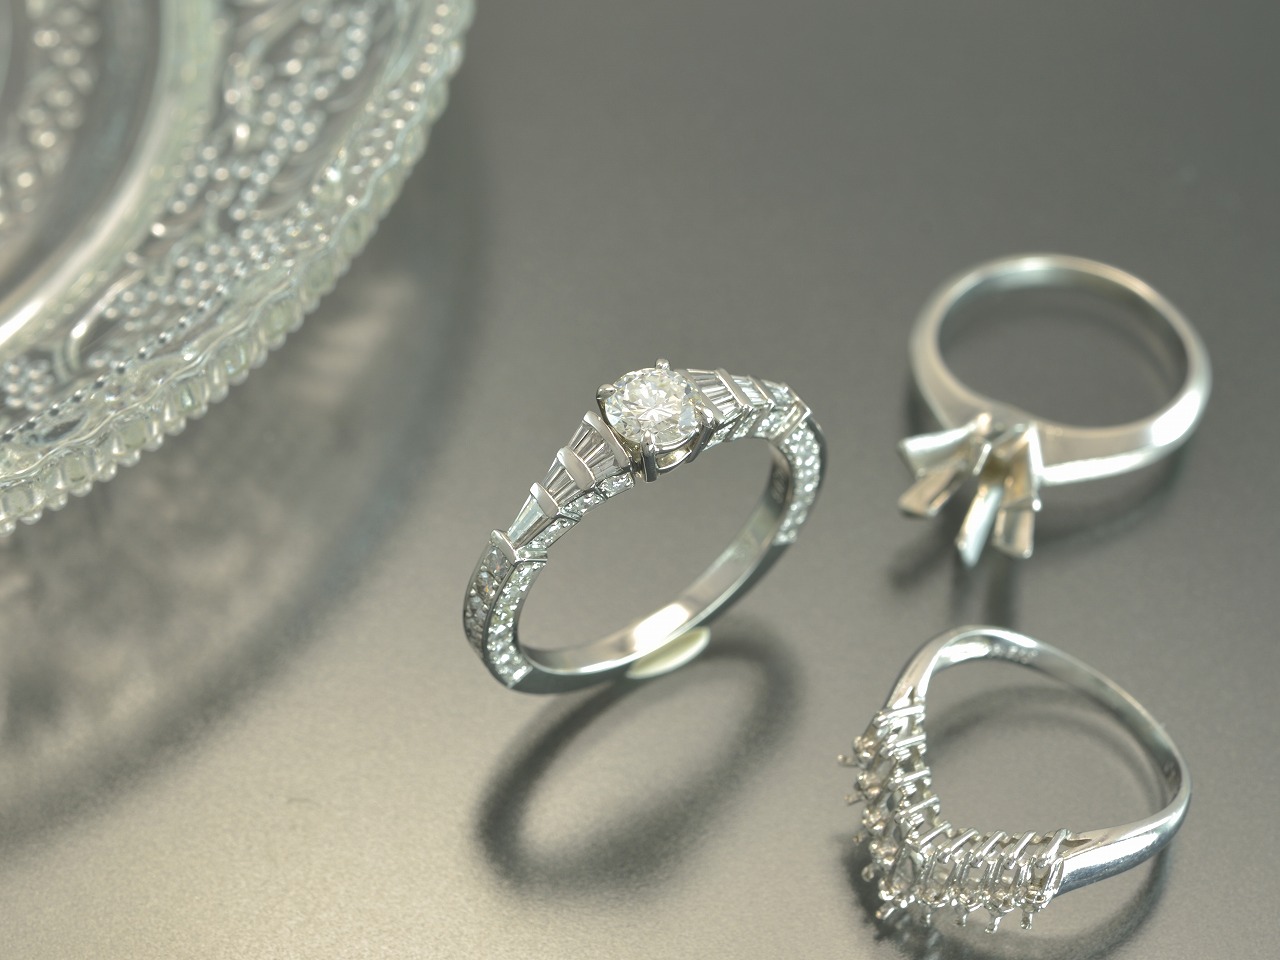 Maison de NADIA:Diamond Jewelry Reform